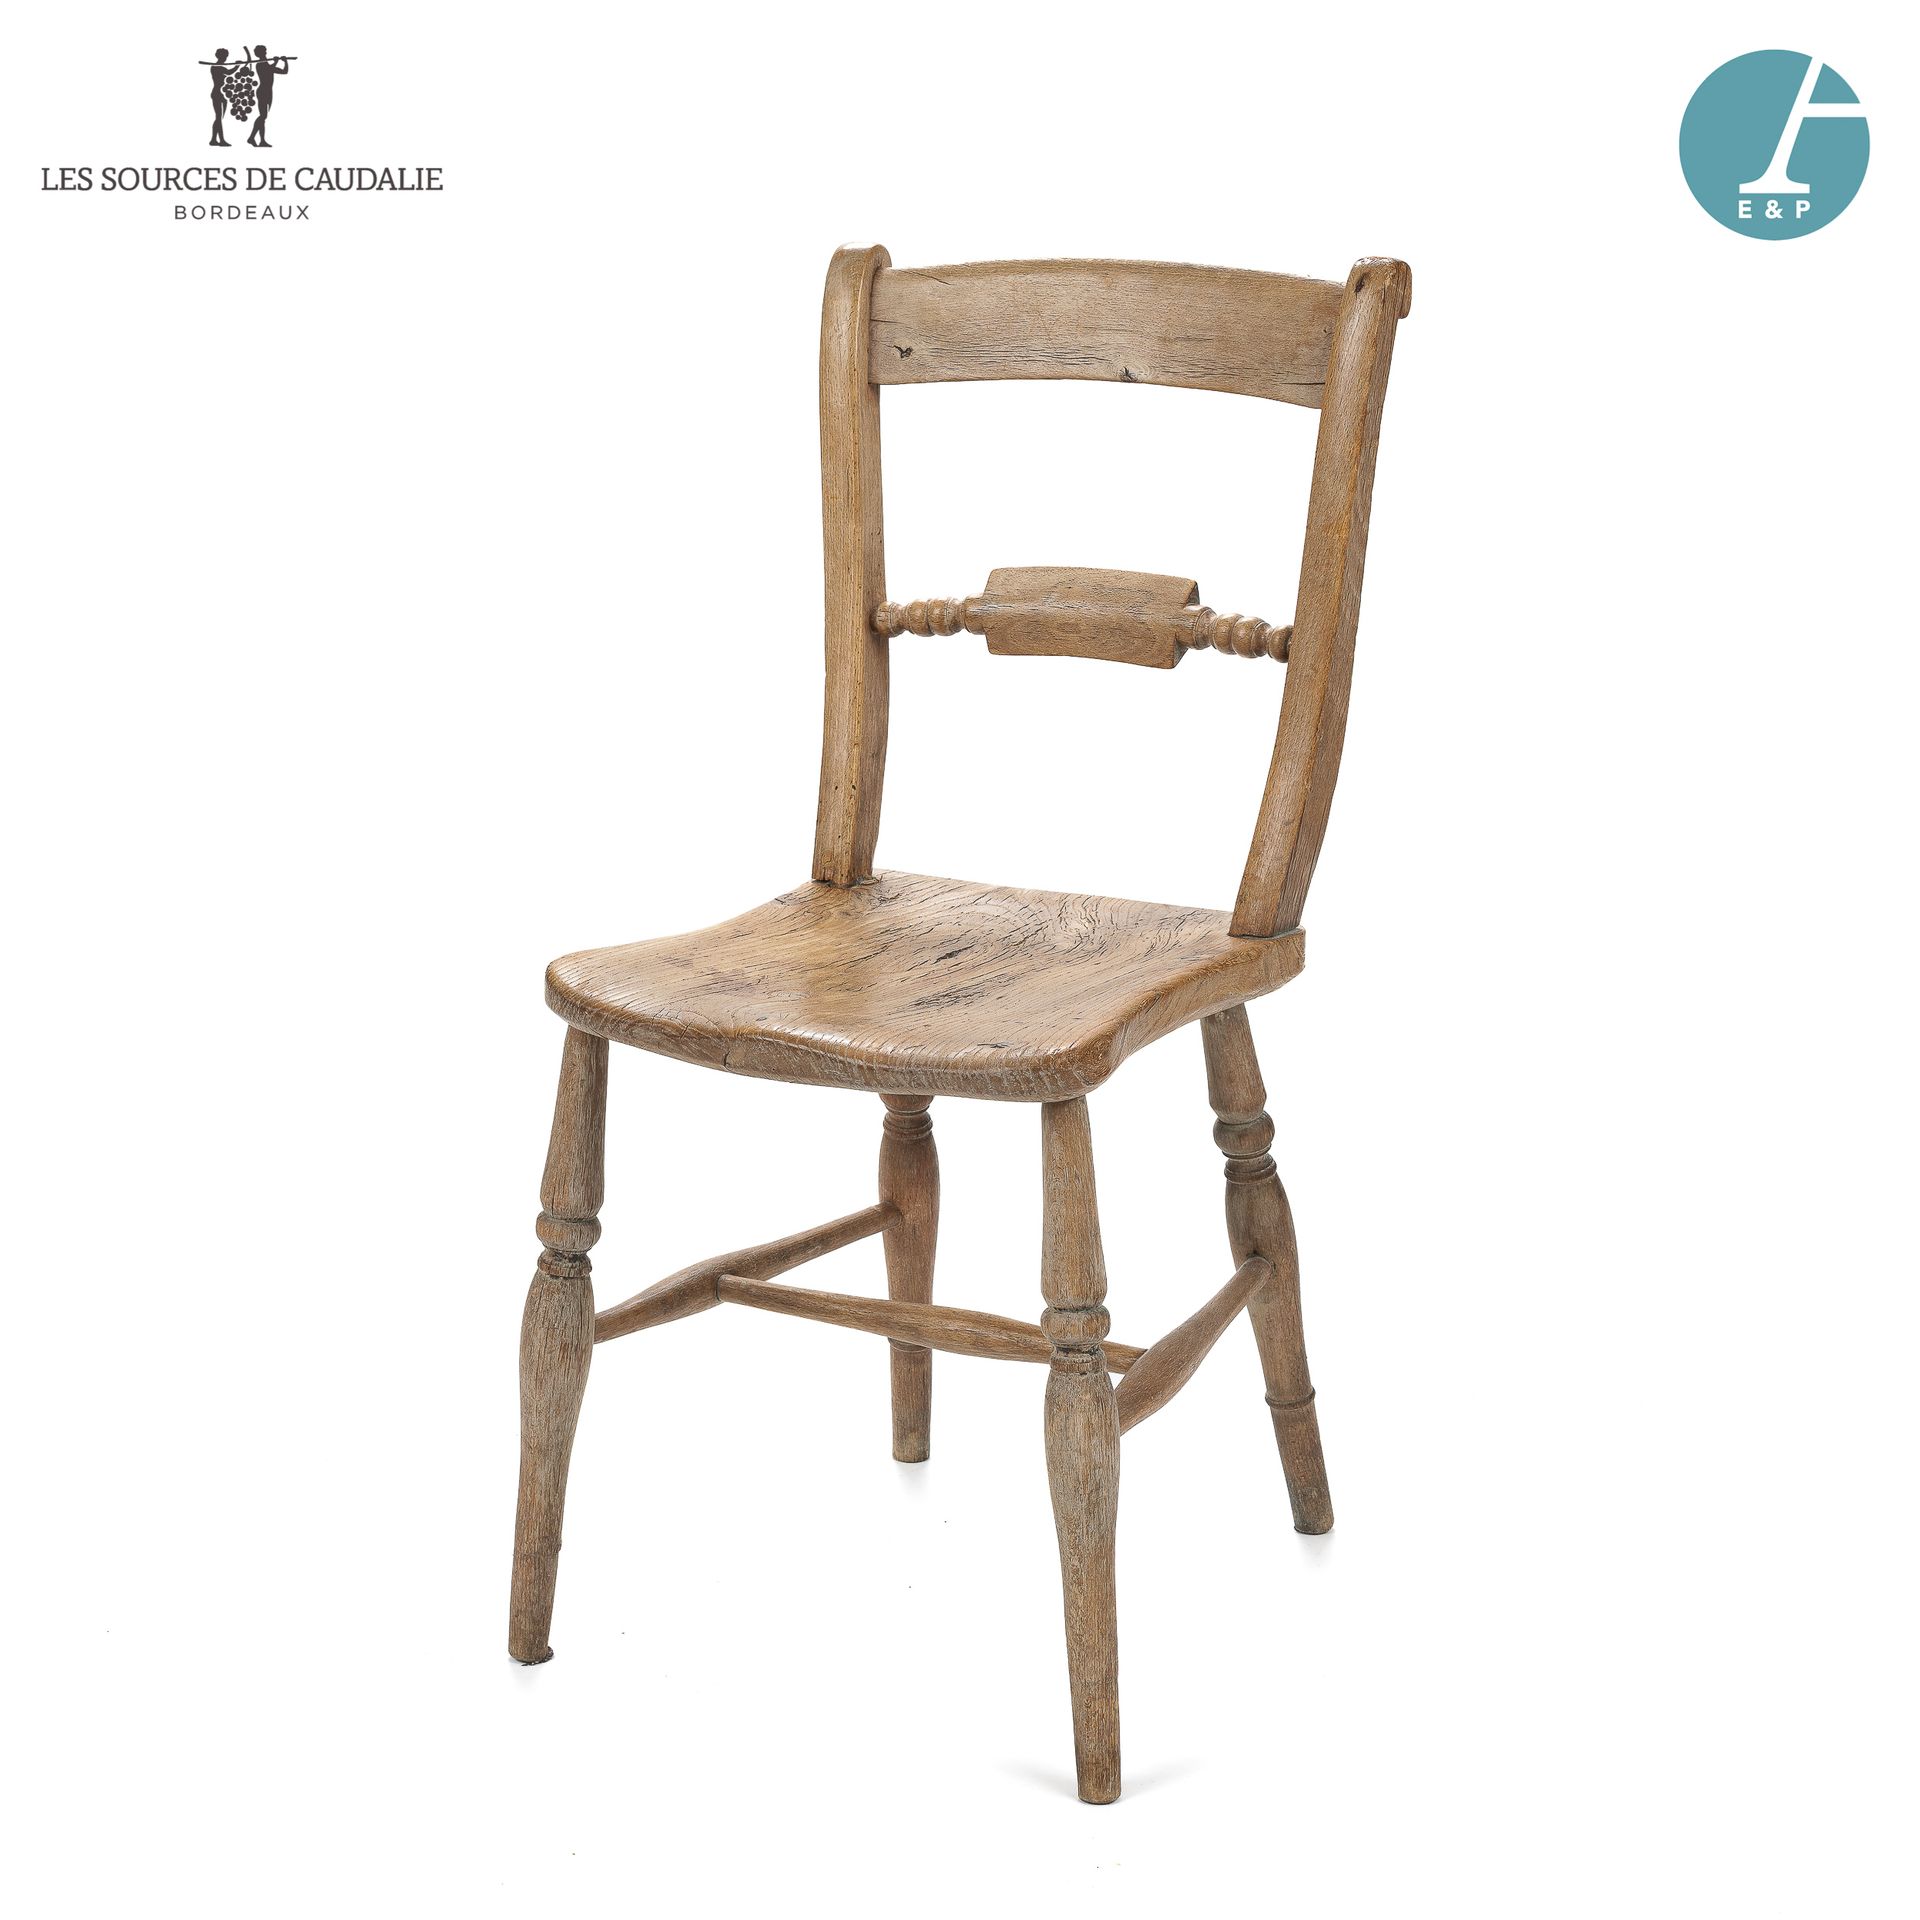 Null 从6号房间 "La Part des Anges "开始

天然木质小椅子

高：83.2厘米 - 宽：40厘米 - 深：45厘米

使用条件